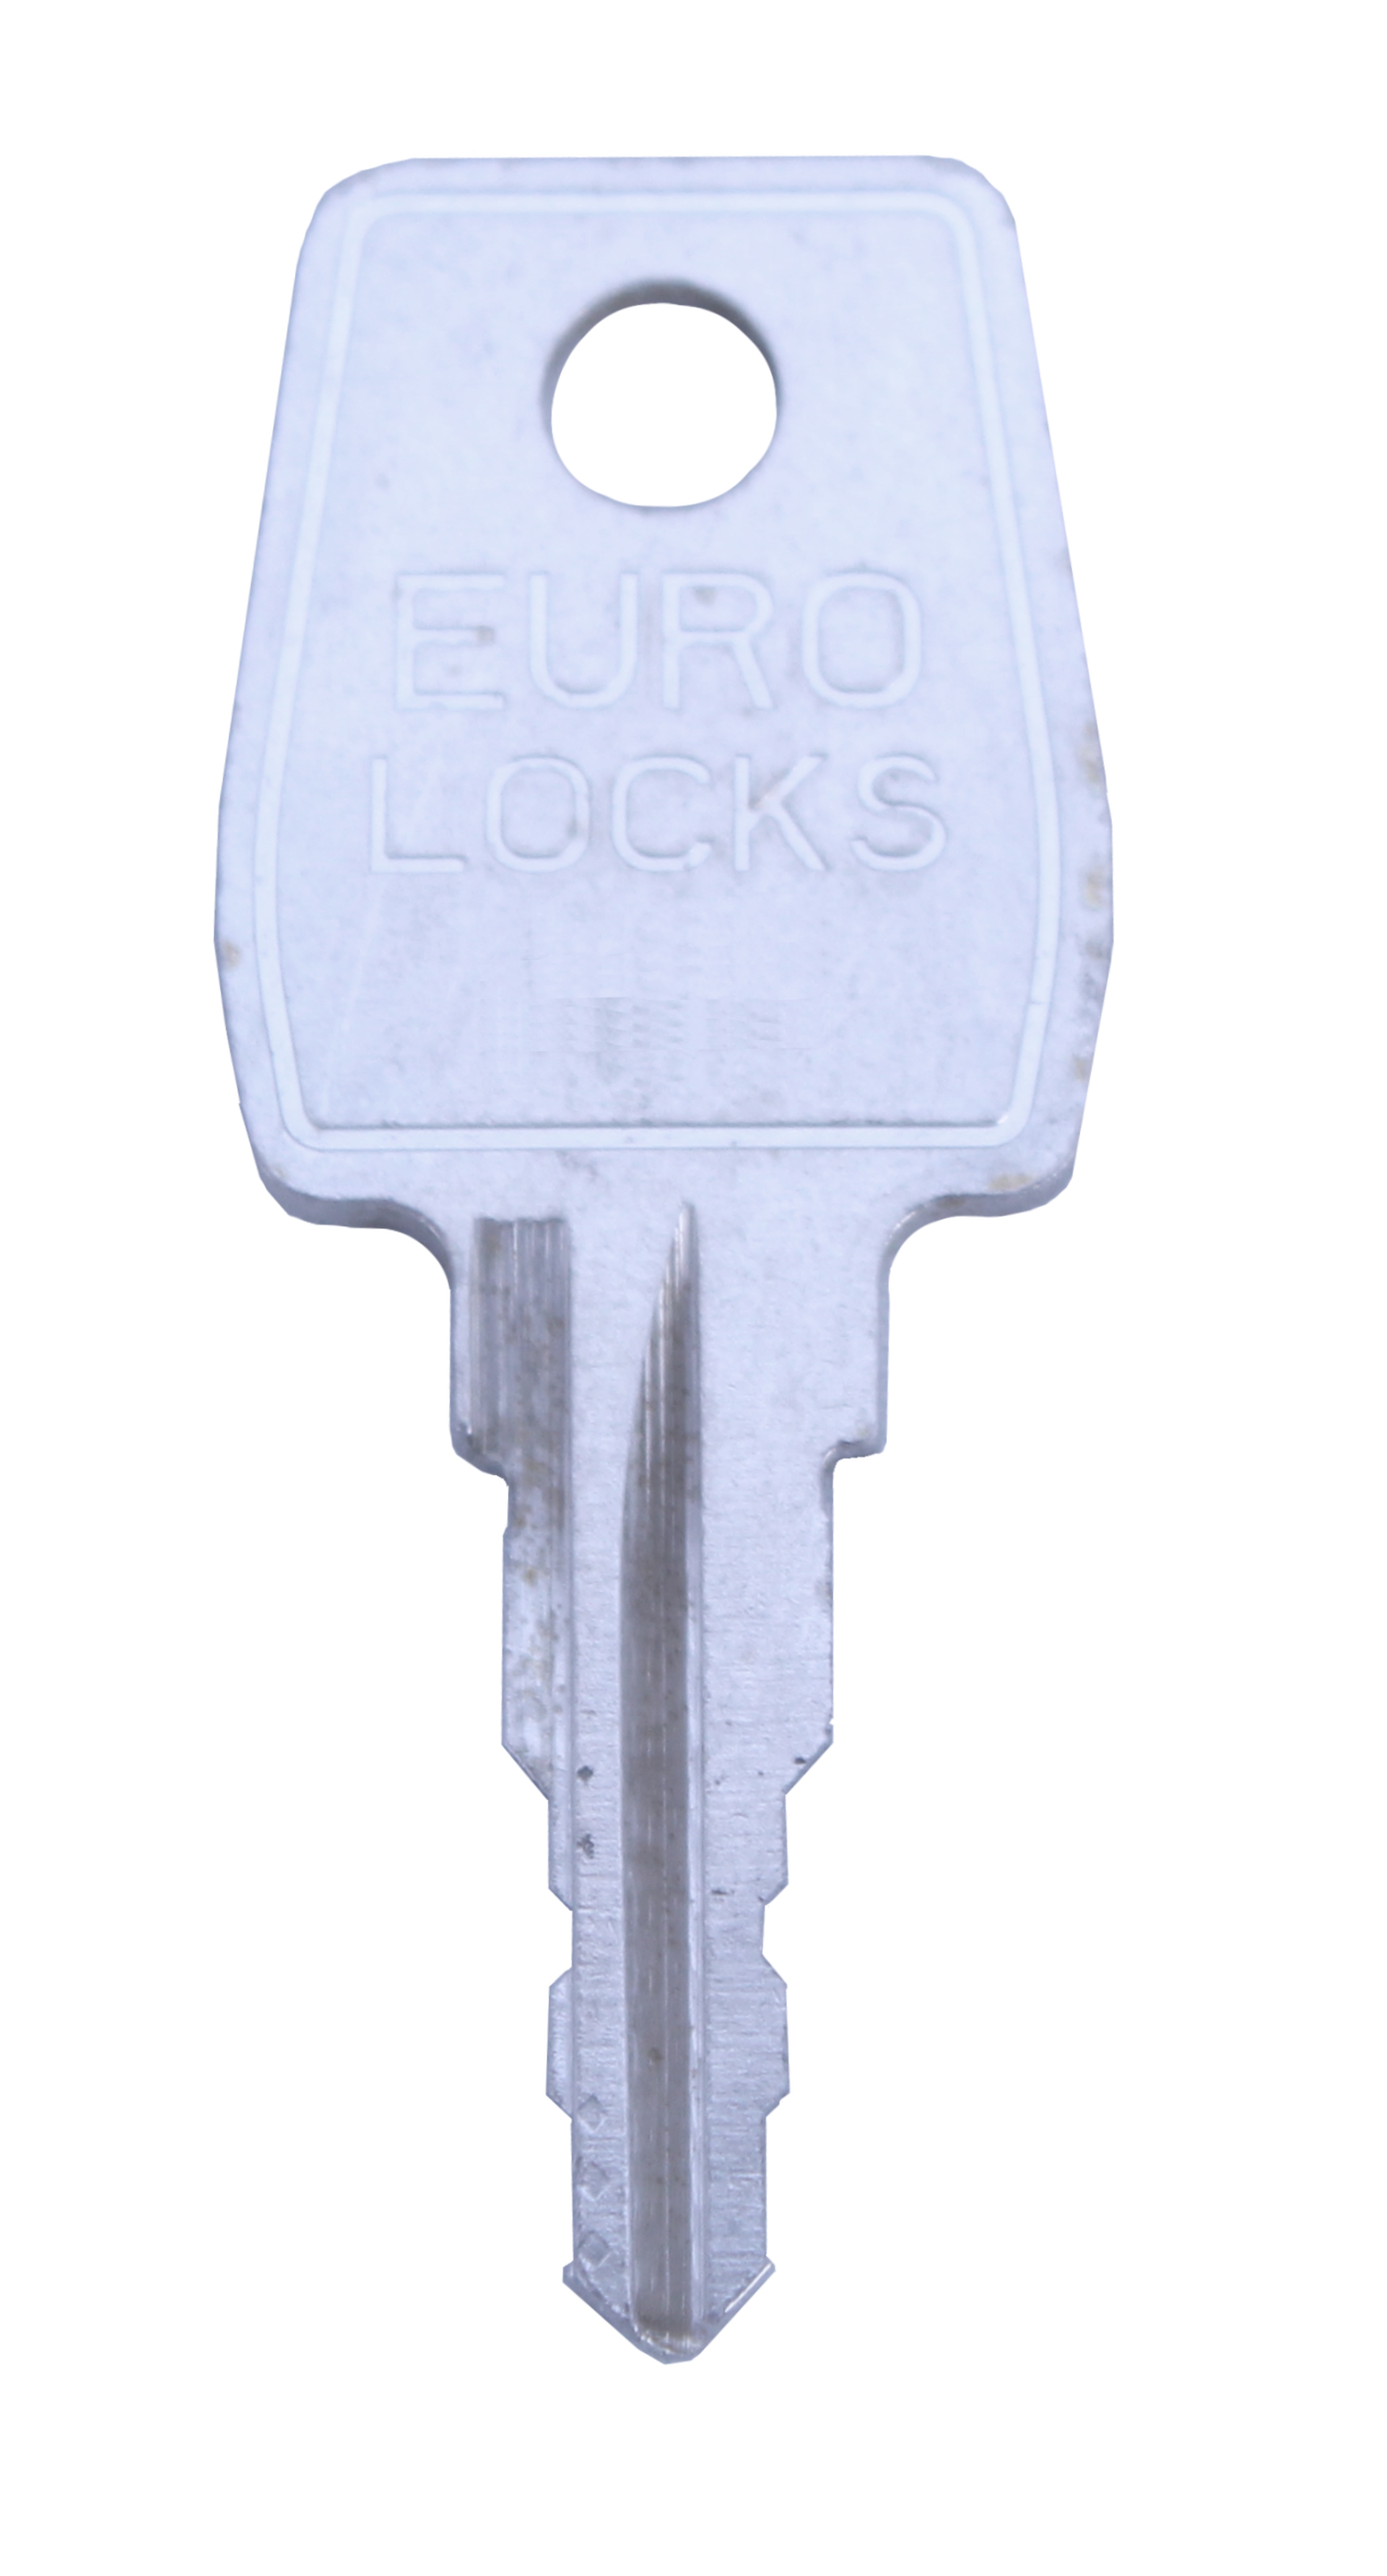 EUROLOCKS Schlüssel - SK 2001 - 4000